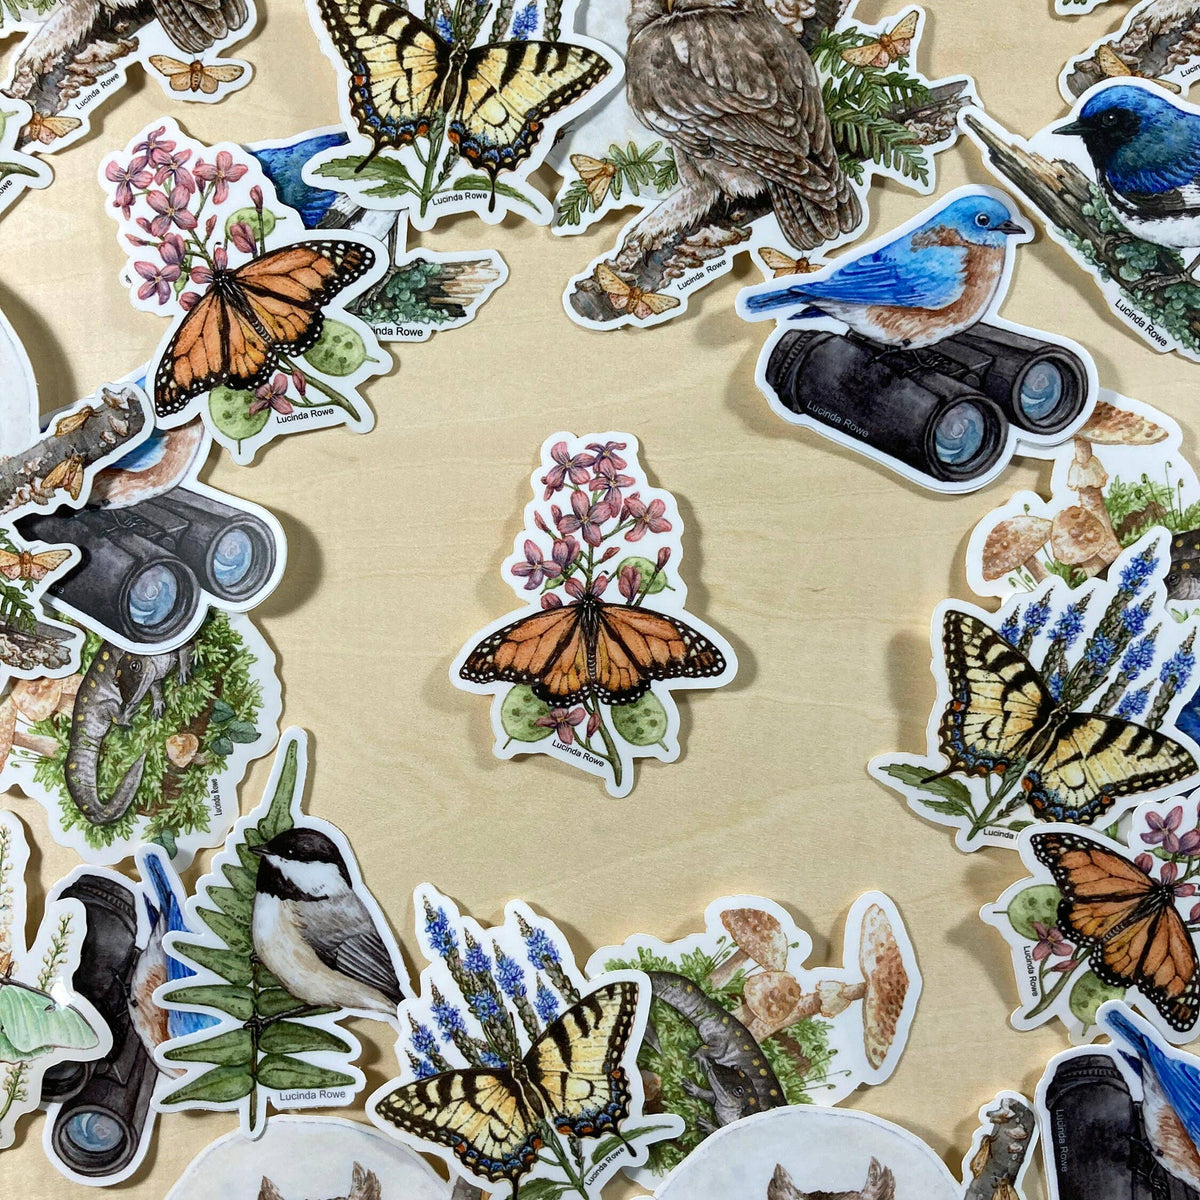 Monarch Butterfly On Honesty - Vinyl Sticker